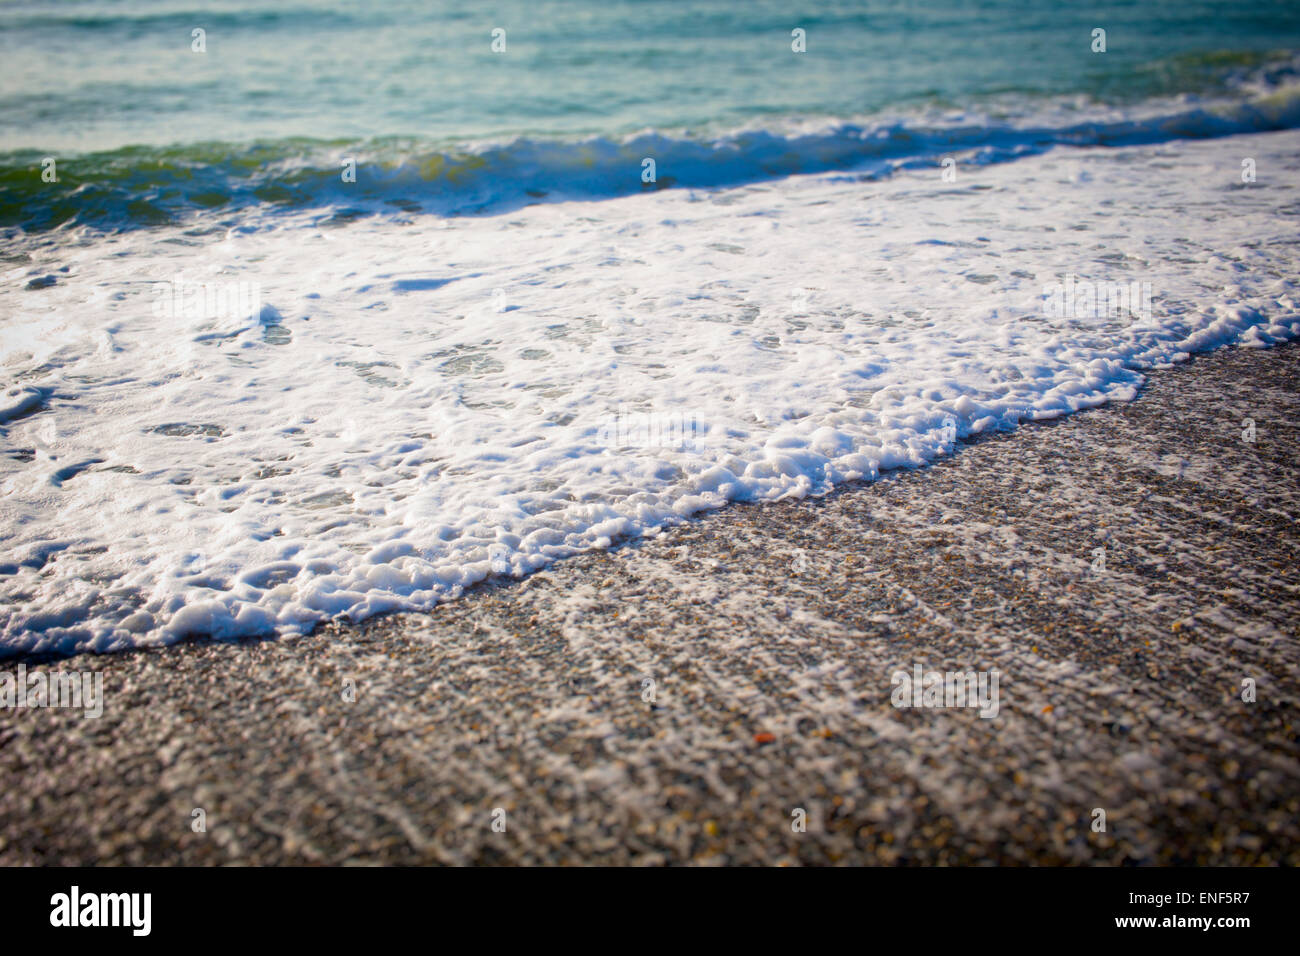 Waves breaking on seashore. Stock Photo